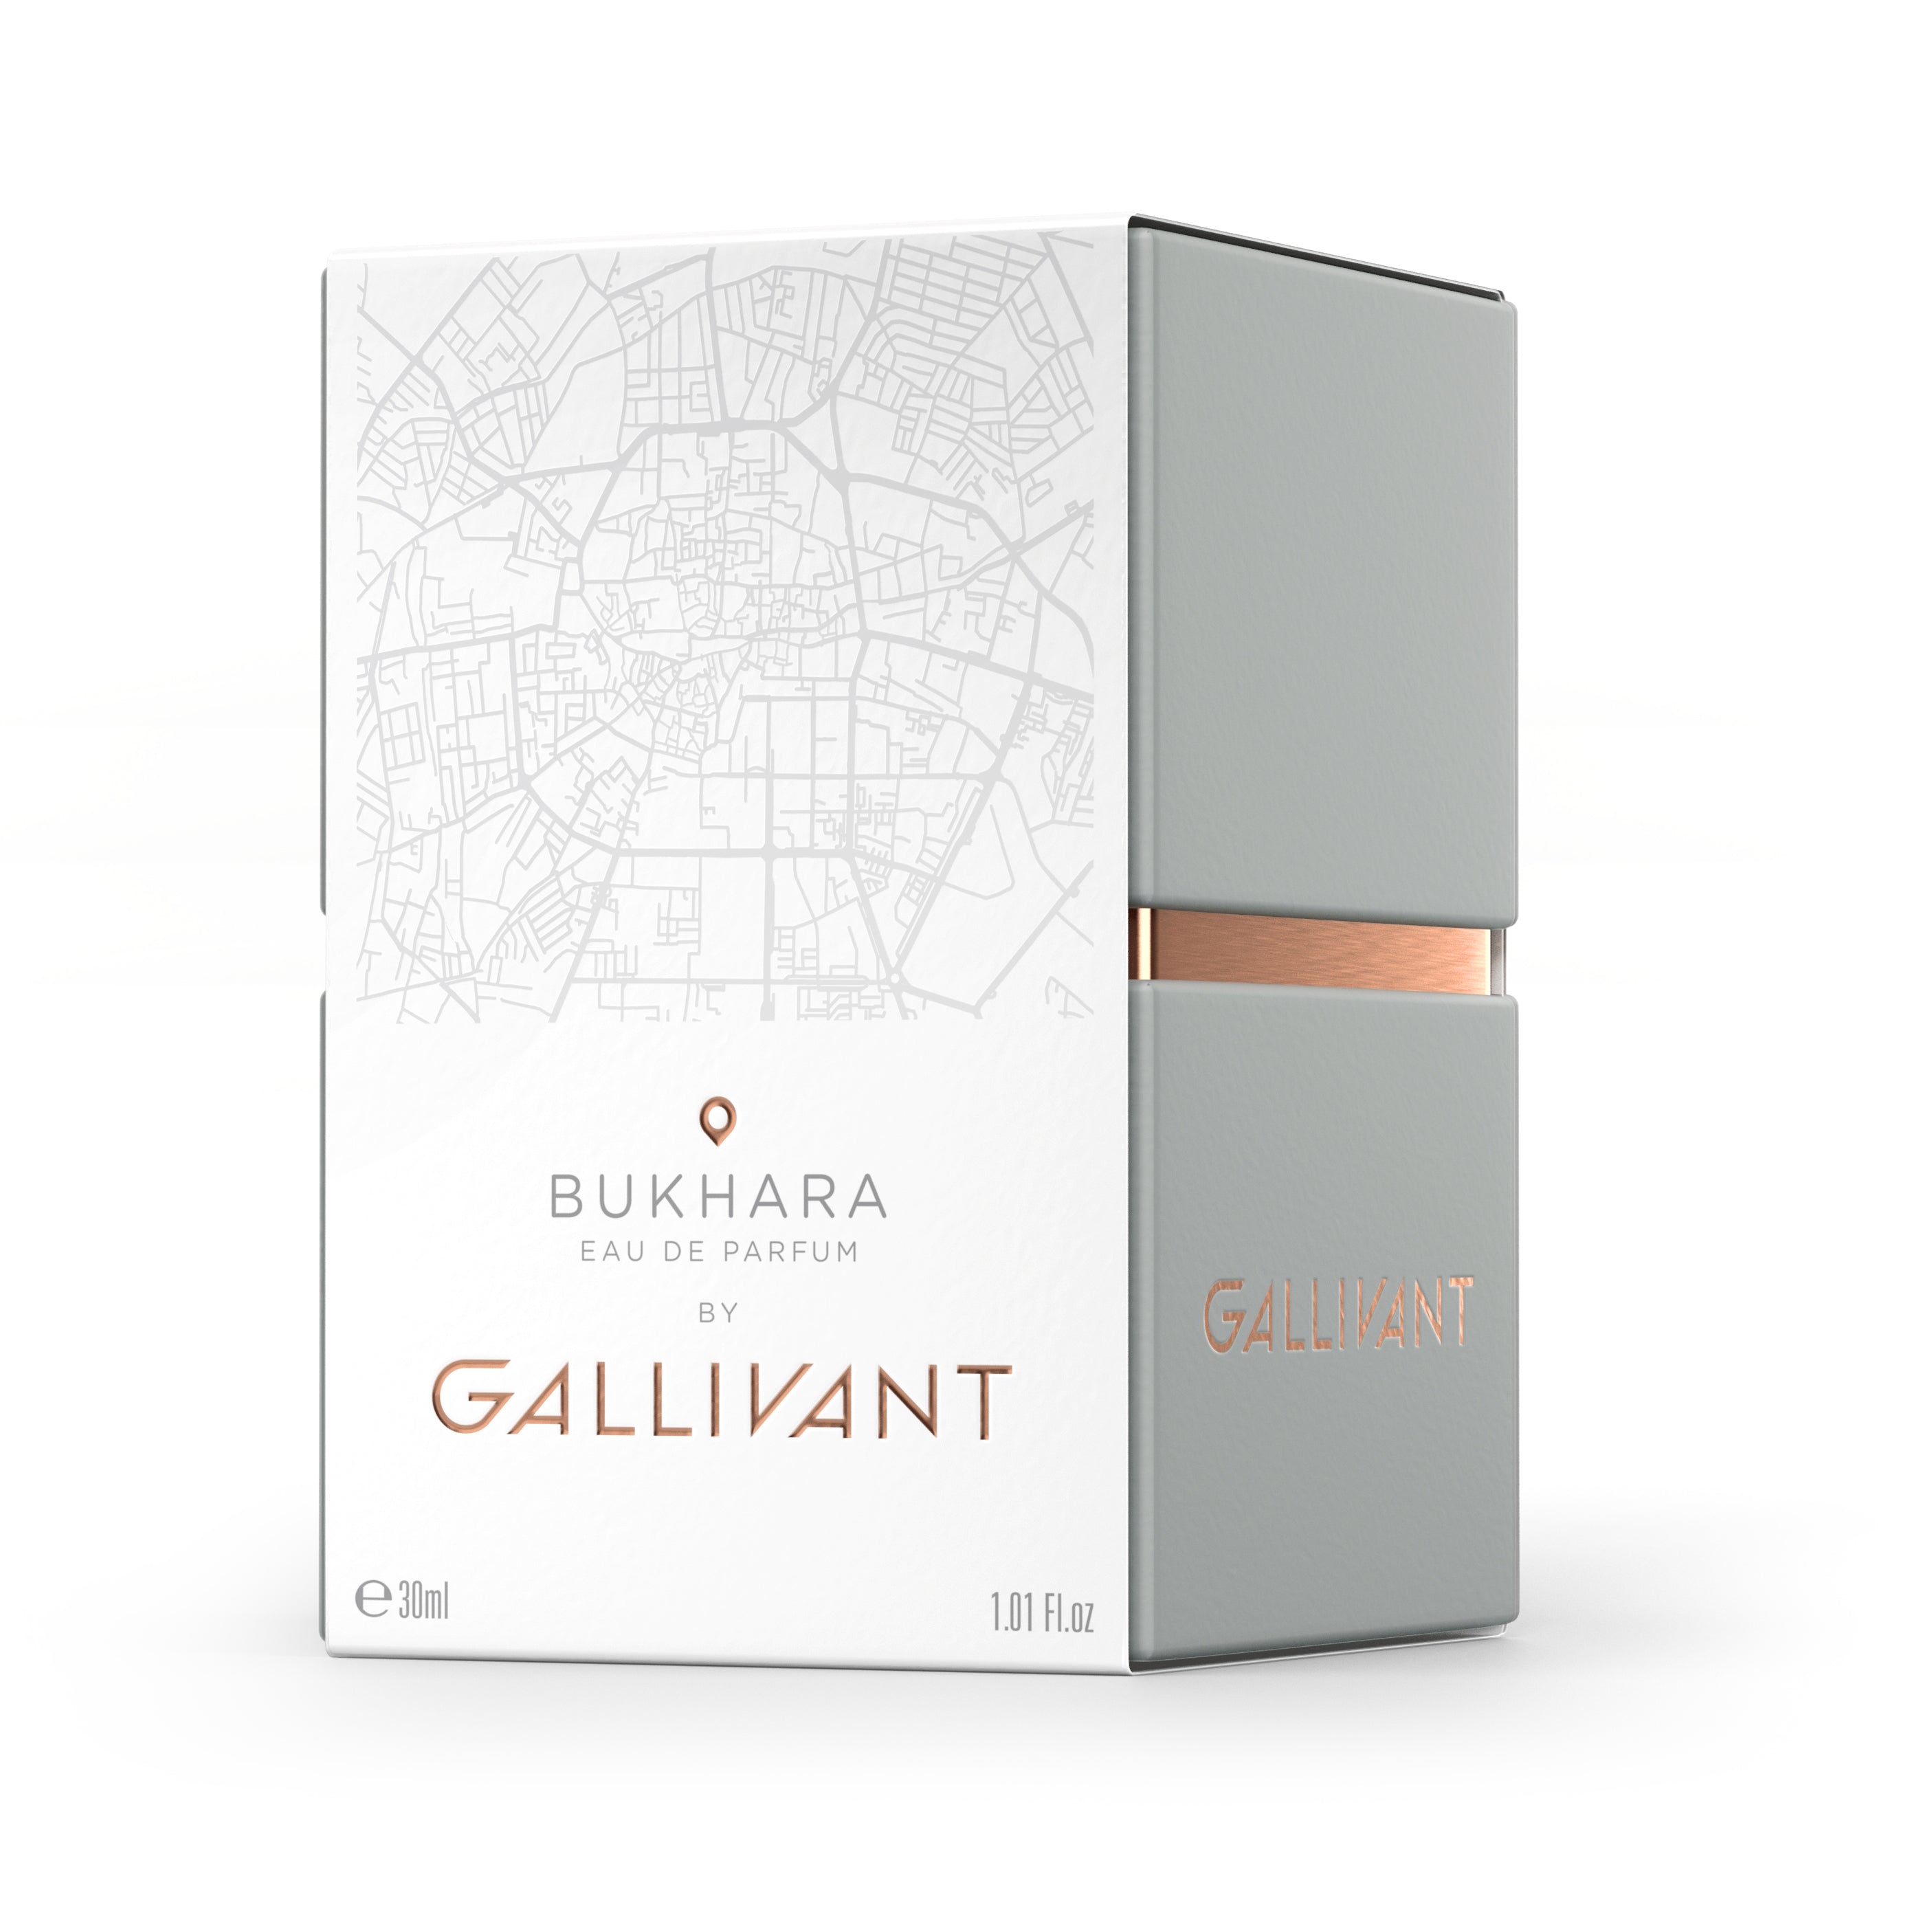 Bukhara 30ml Eau de Parfum Box by Gallivant